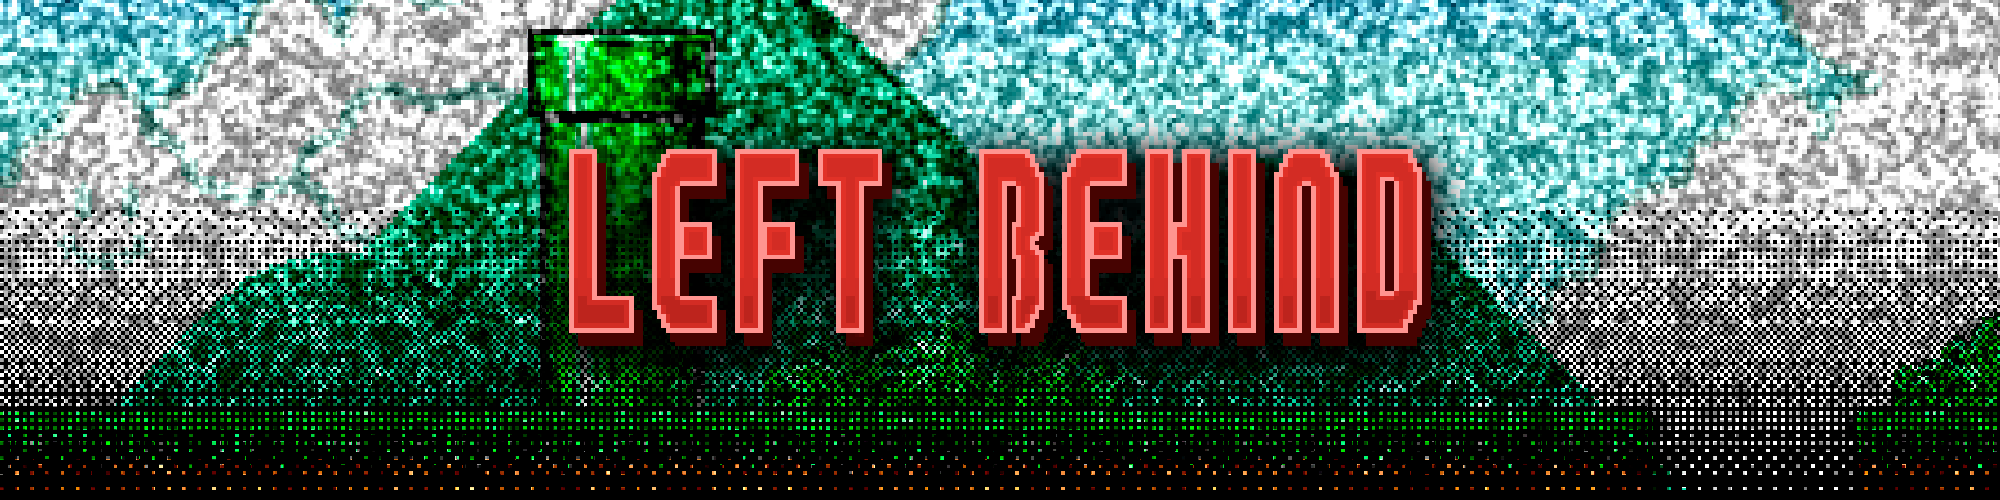 Left Behind v2.0 - Mario Creepypasta Game